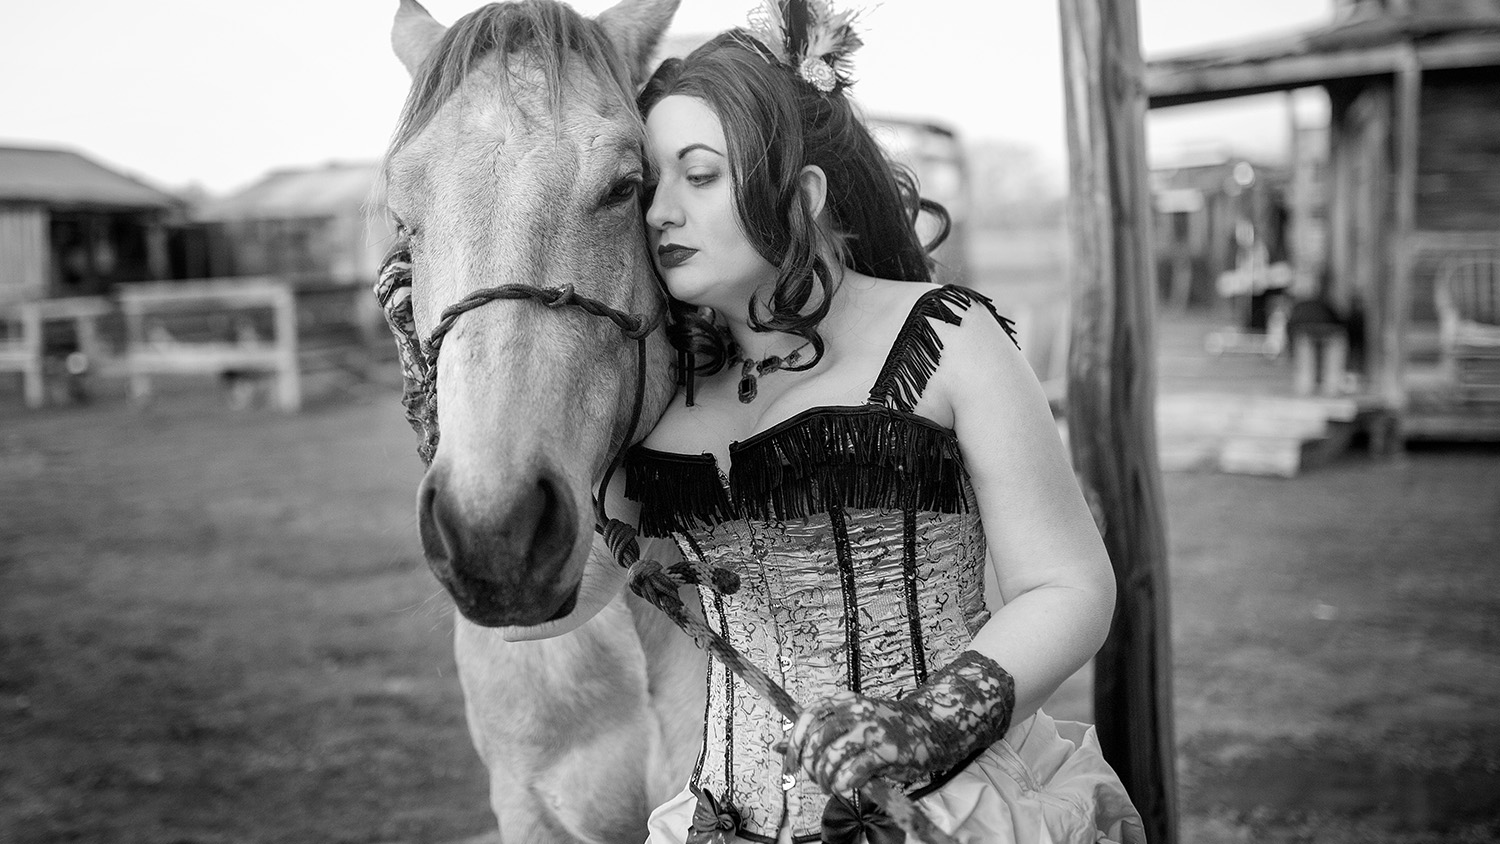 hooker western portrait with horse Old Western